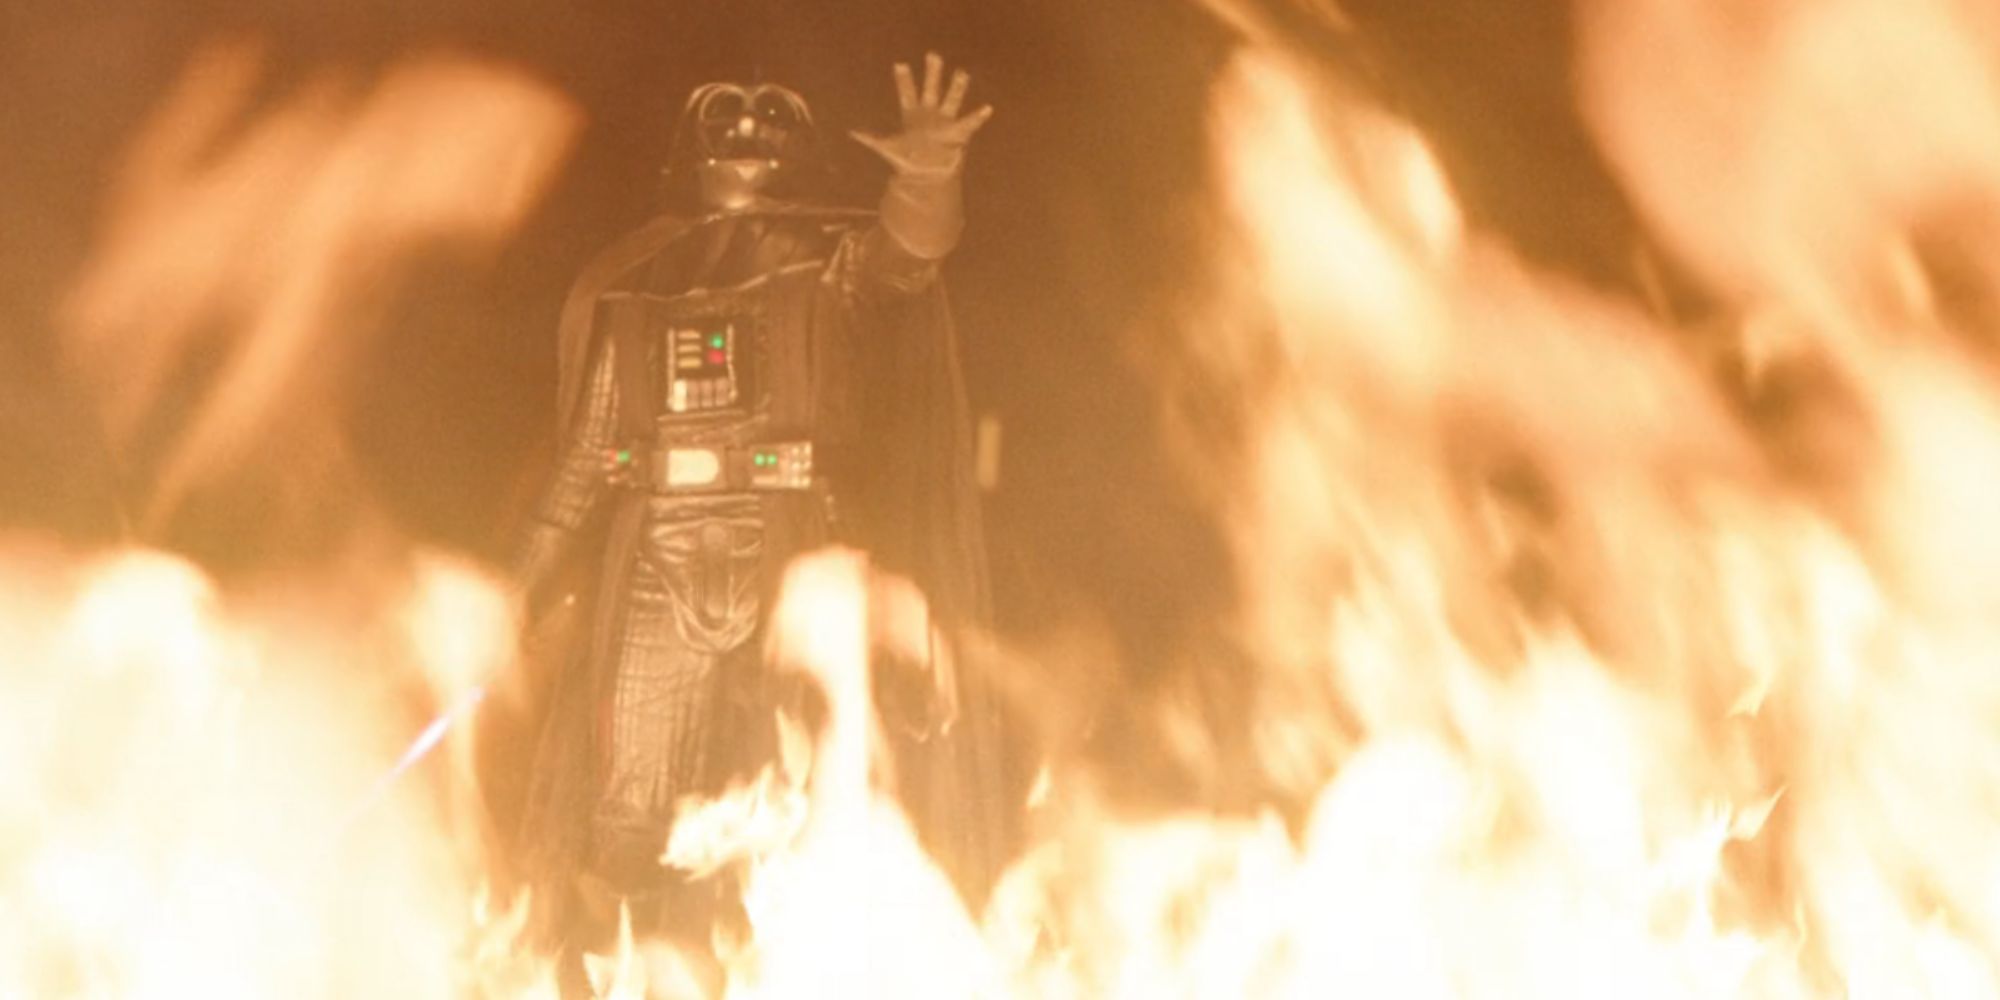 Darth Vader burns Obi-Wan